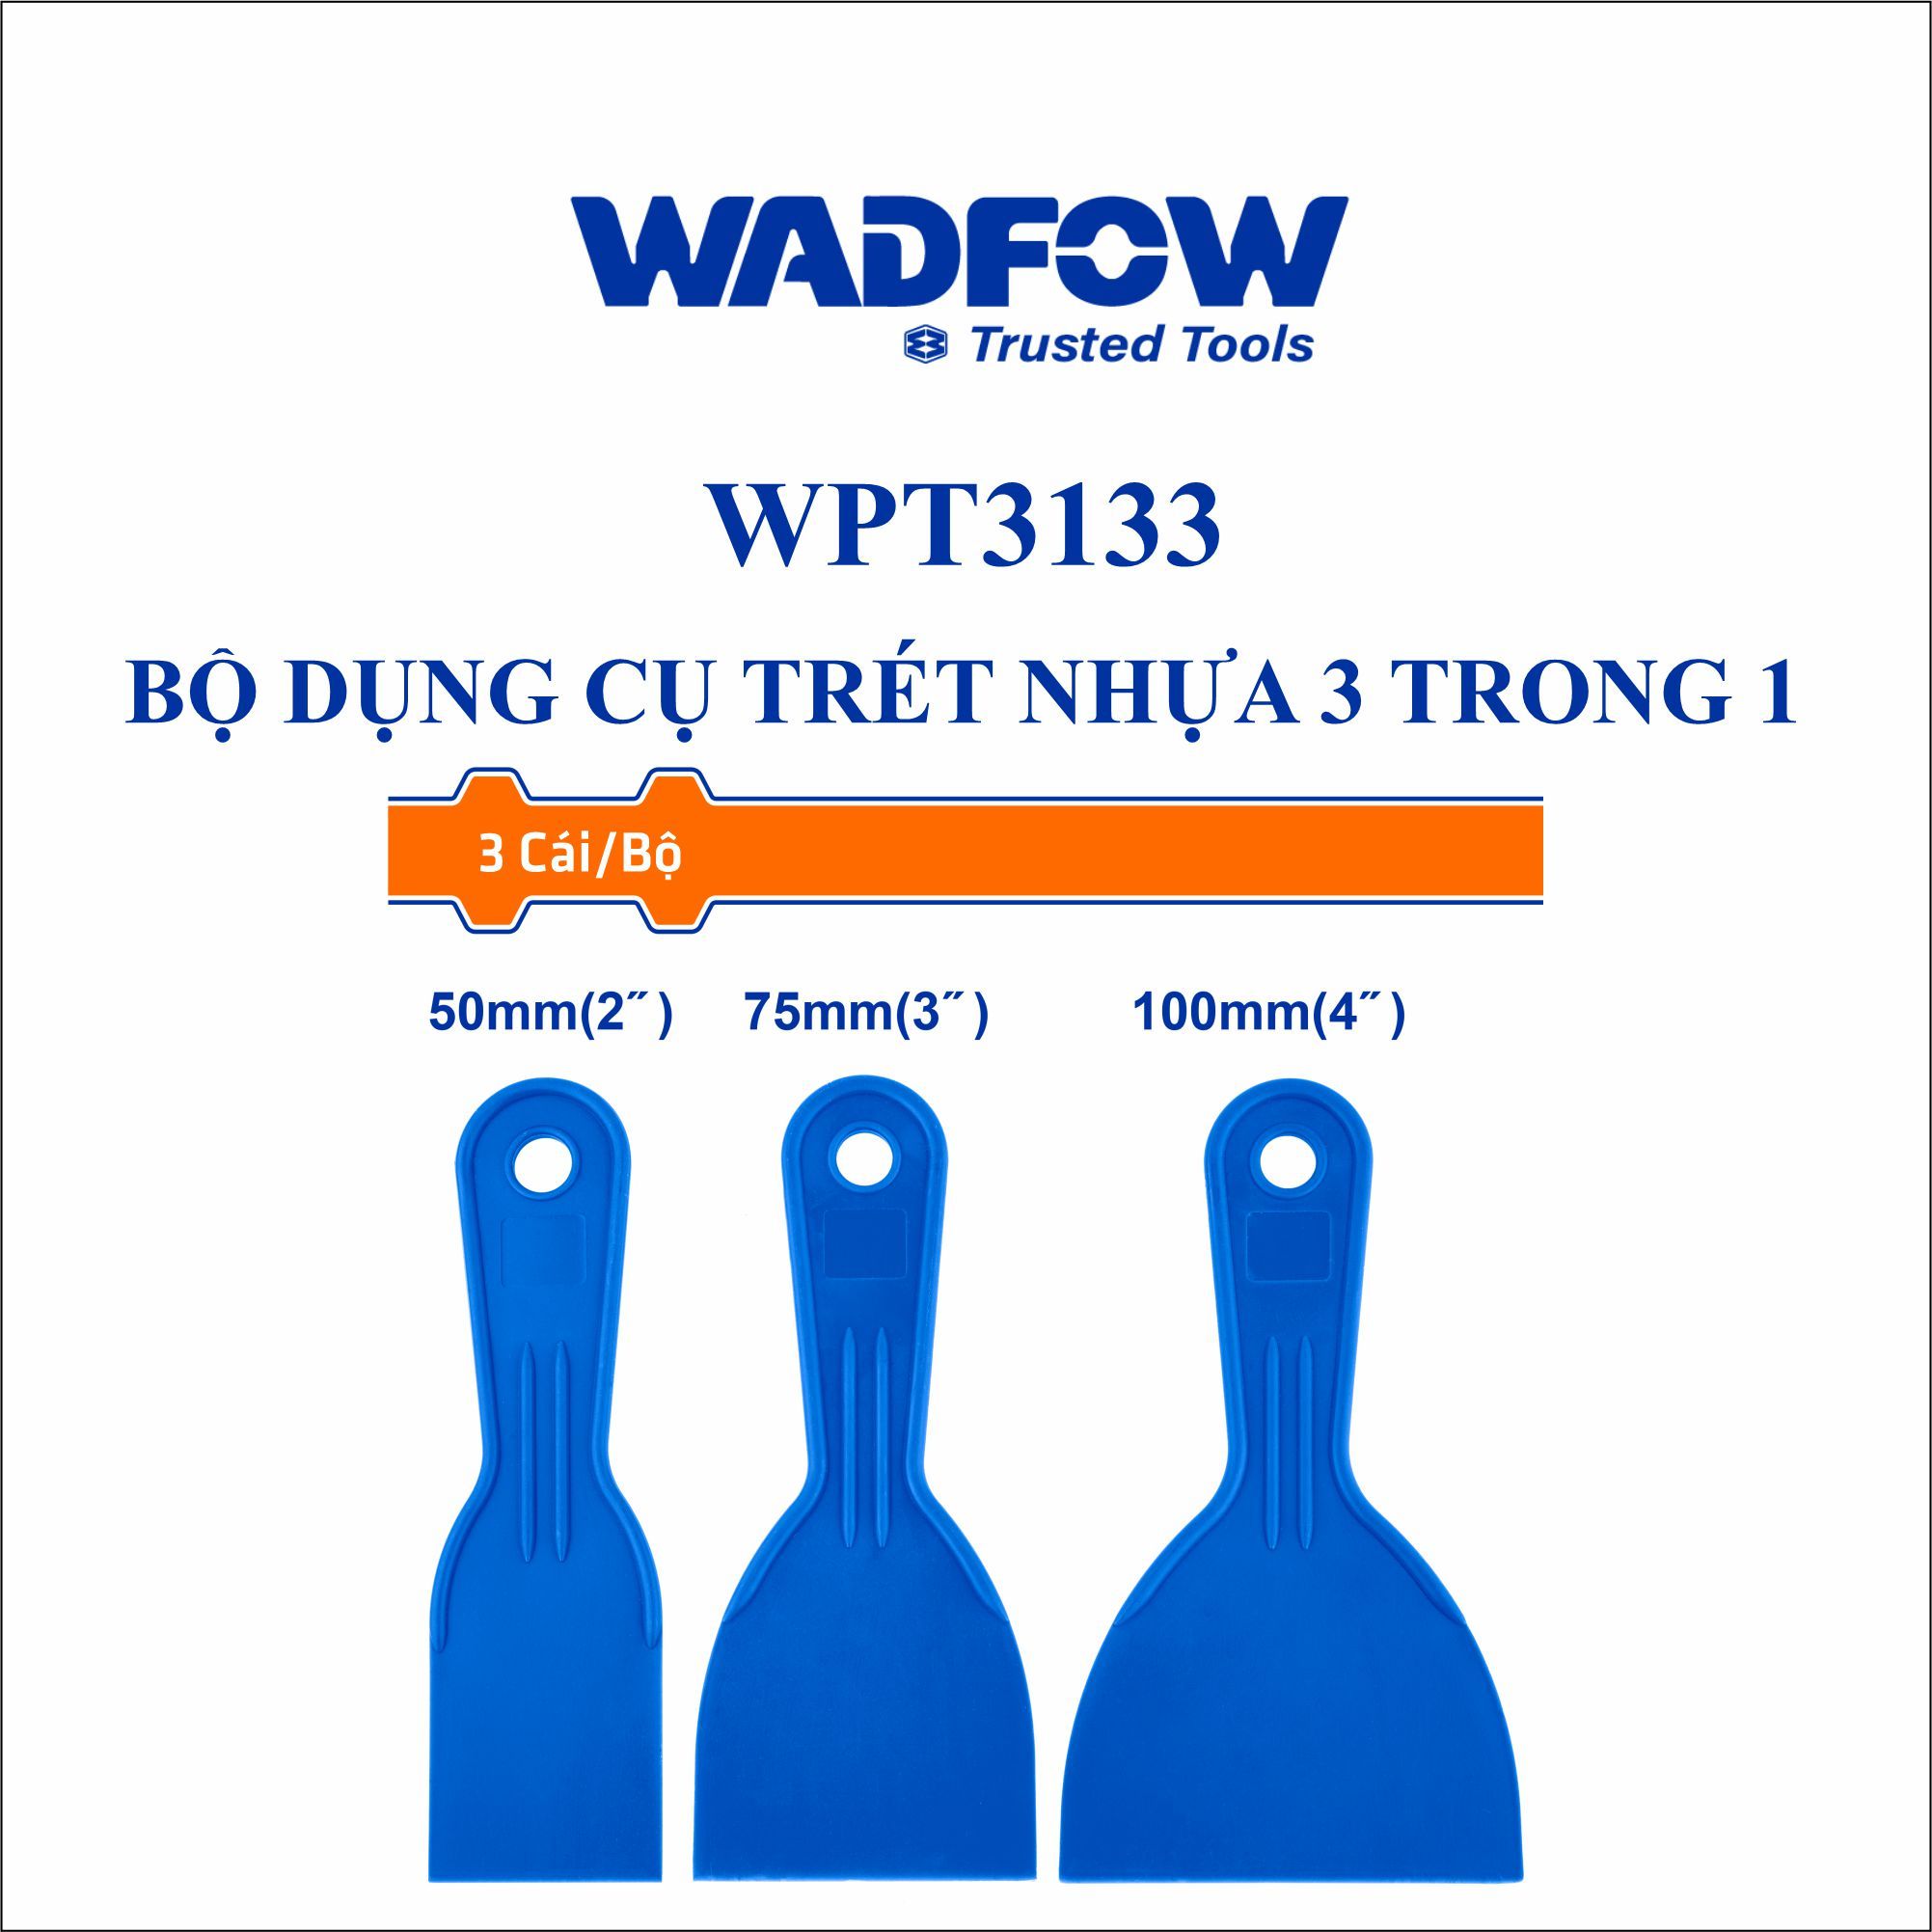  Bộ dụng cụ trét nhựa 3 trong 1 WADFOW WPT3133 